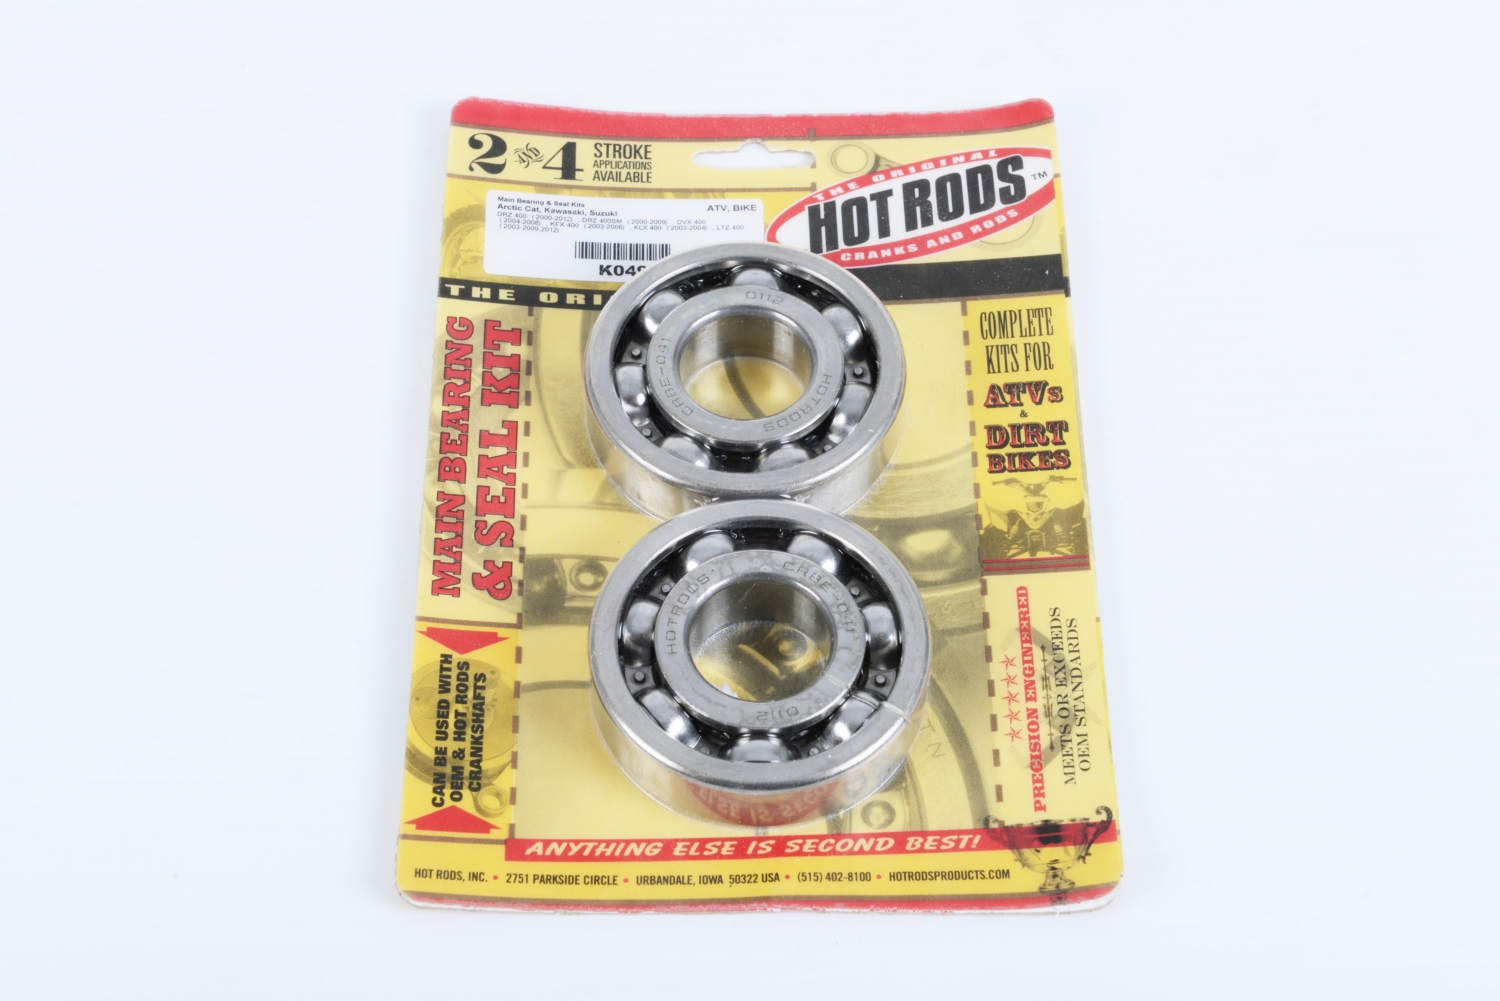 HOT-RODS Crankshaft Bearing Kit | Kimpex Canada